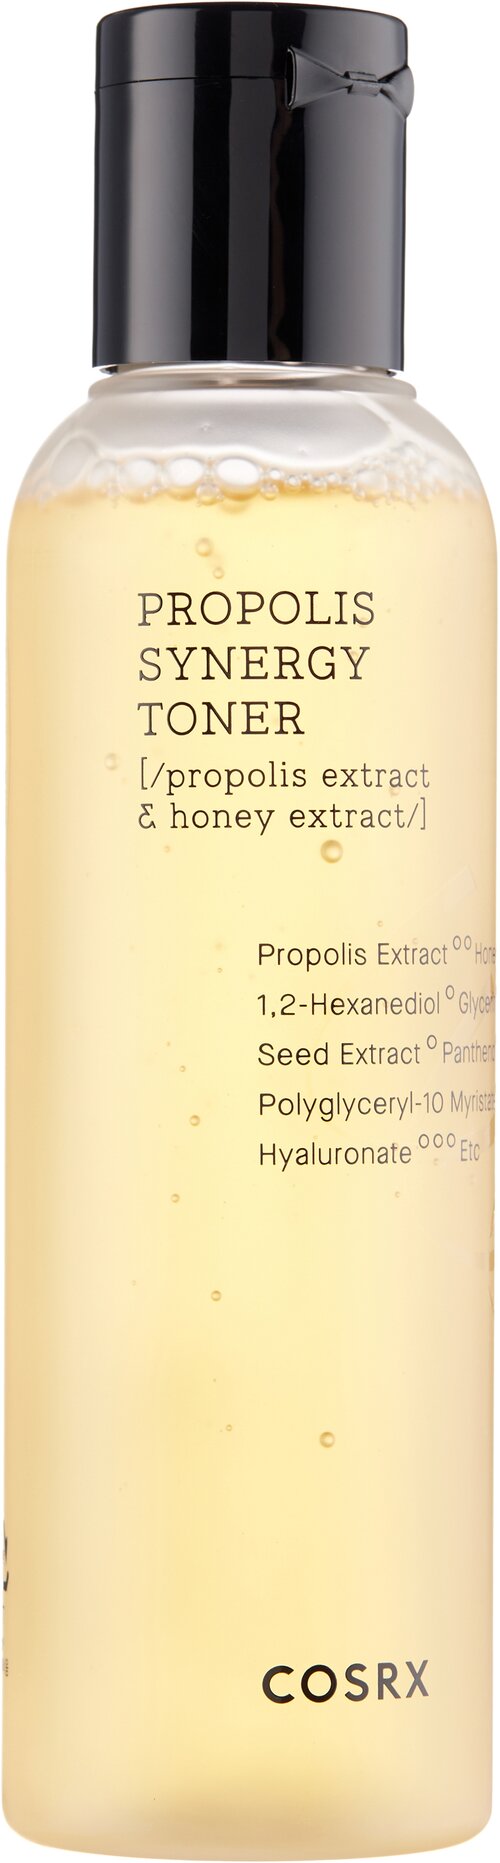 COSRX Тонер Propolis Synergy Honey extract, 150 мл